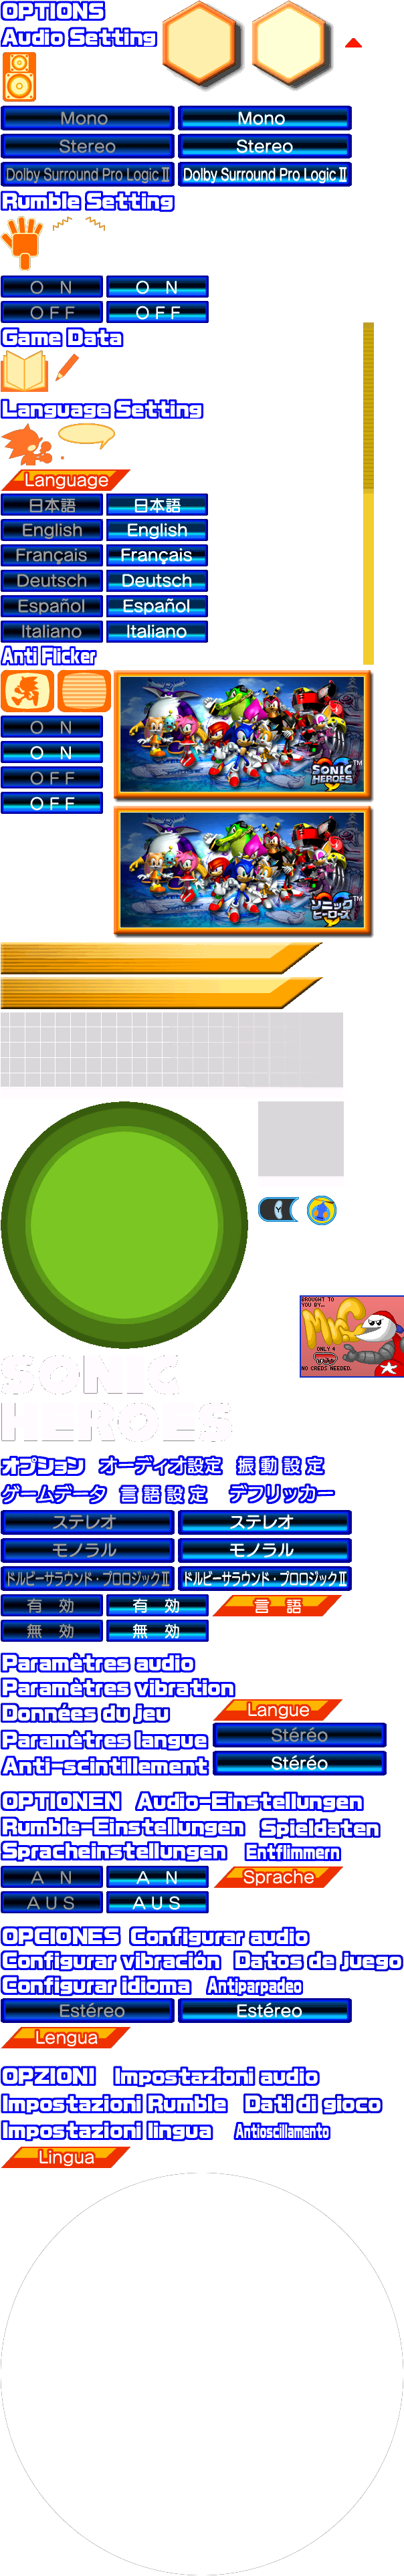 Sonic Heroes - Options